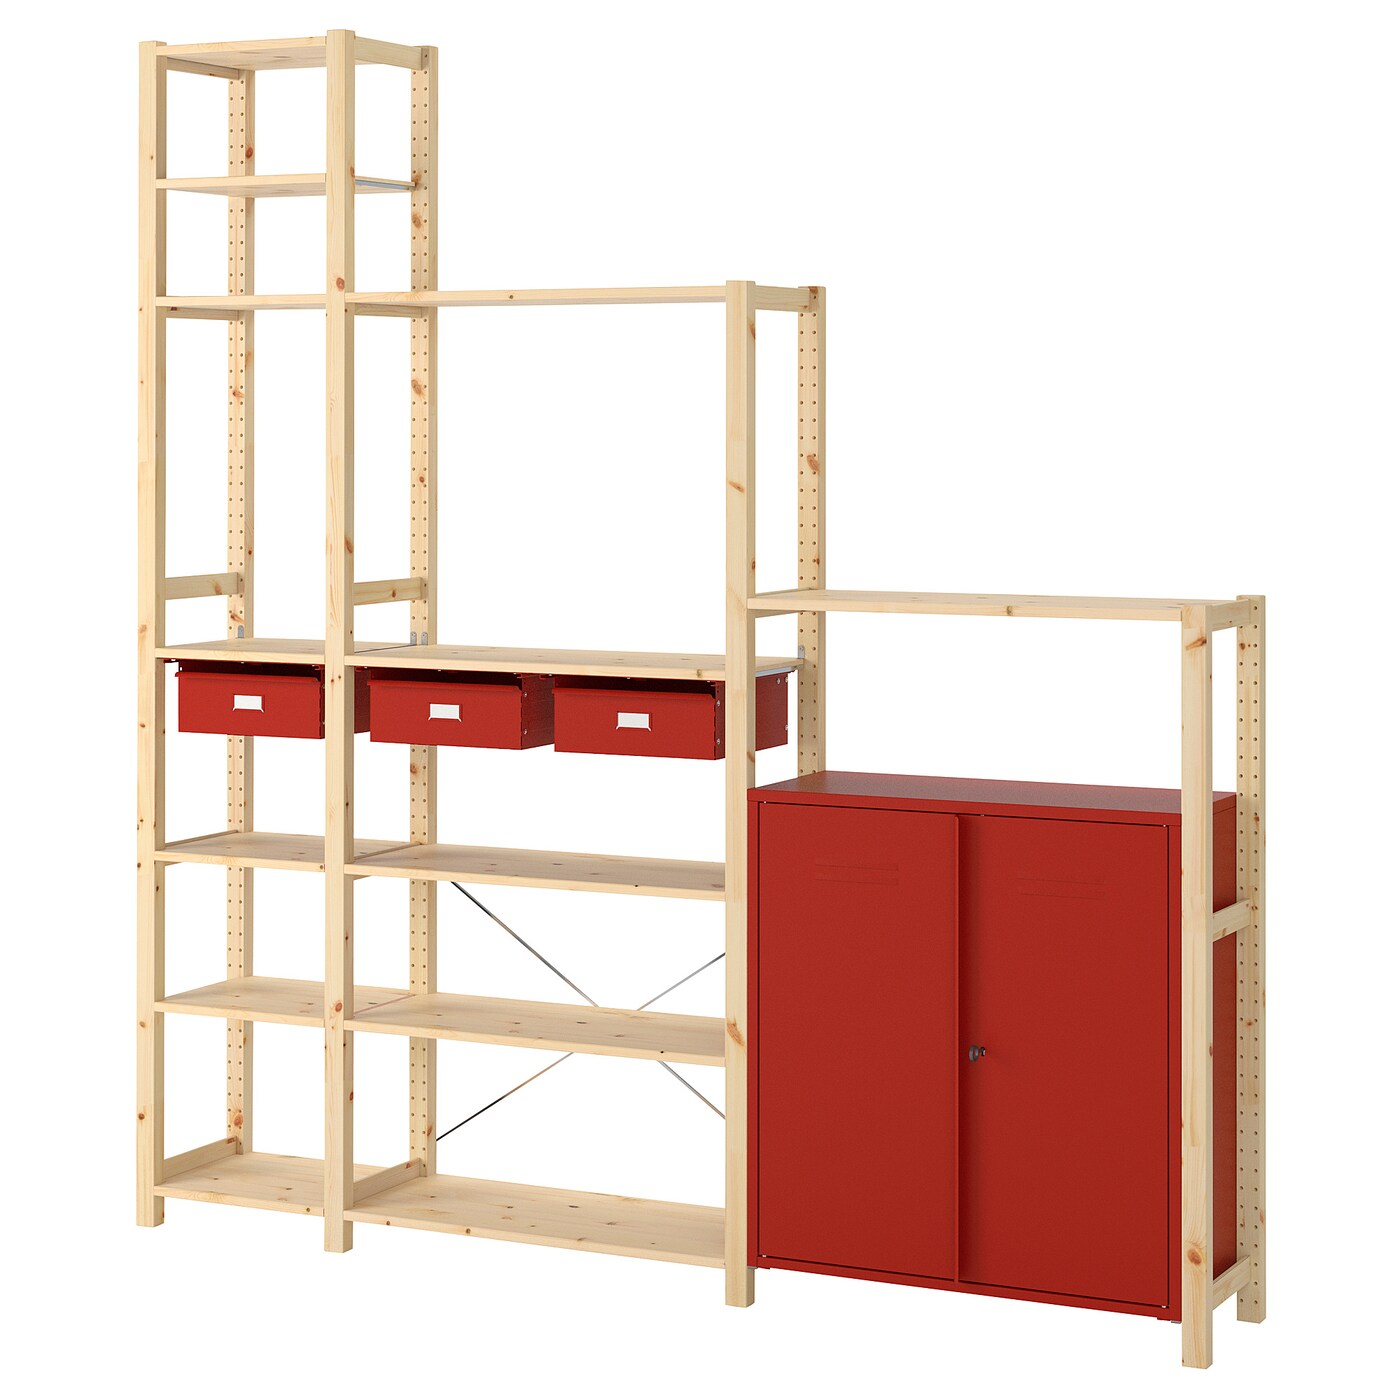 Verst slaaf spuiten Woonhome - IKEA &#8211; IVAR Stellingkast met kast/lades &#8211; 219x30x226  cm &#8211; Grenen/rood